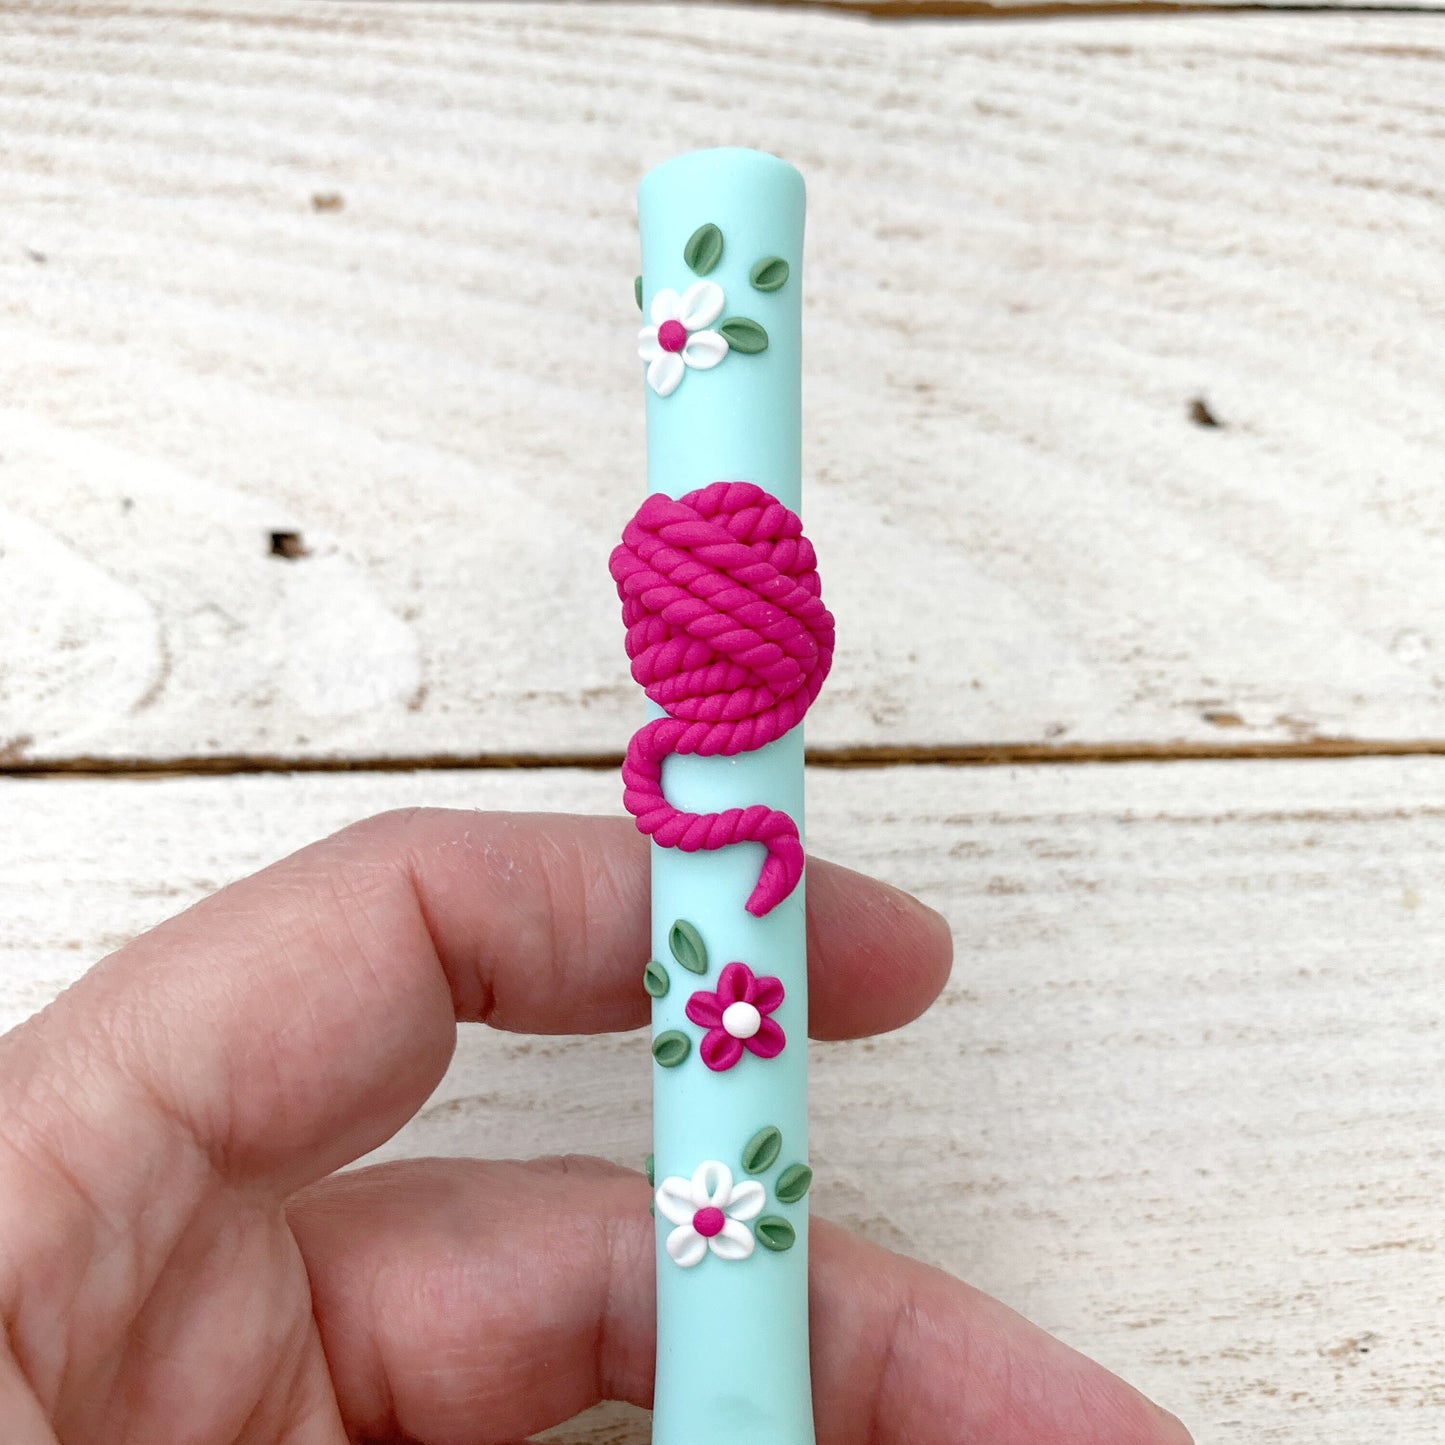 Pink and mint yarn ball crochet hook, ergonomic crochet hook, polymer clay covered crochet hooks, yarn ball, crochet tools